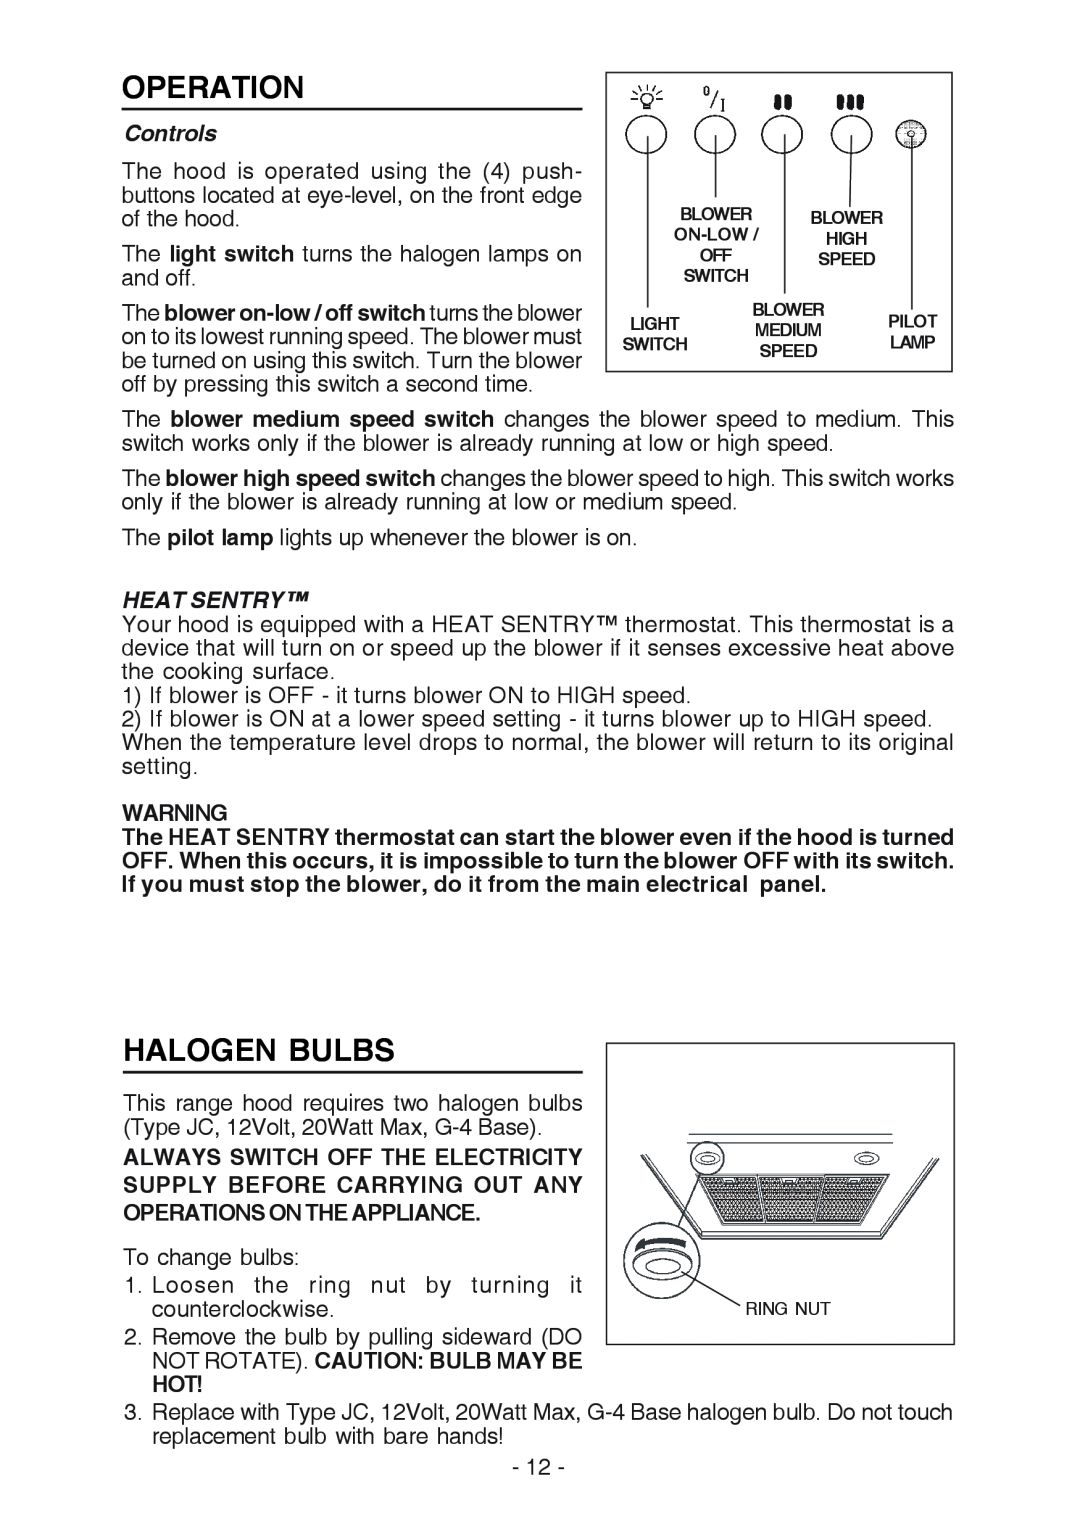 Best K3139 manual Operation, Halogen Bulbs, Controls, Heat Sentry 